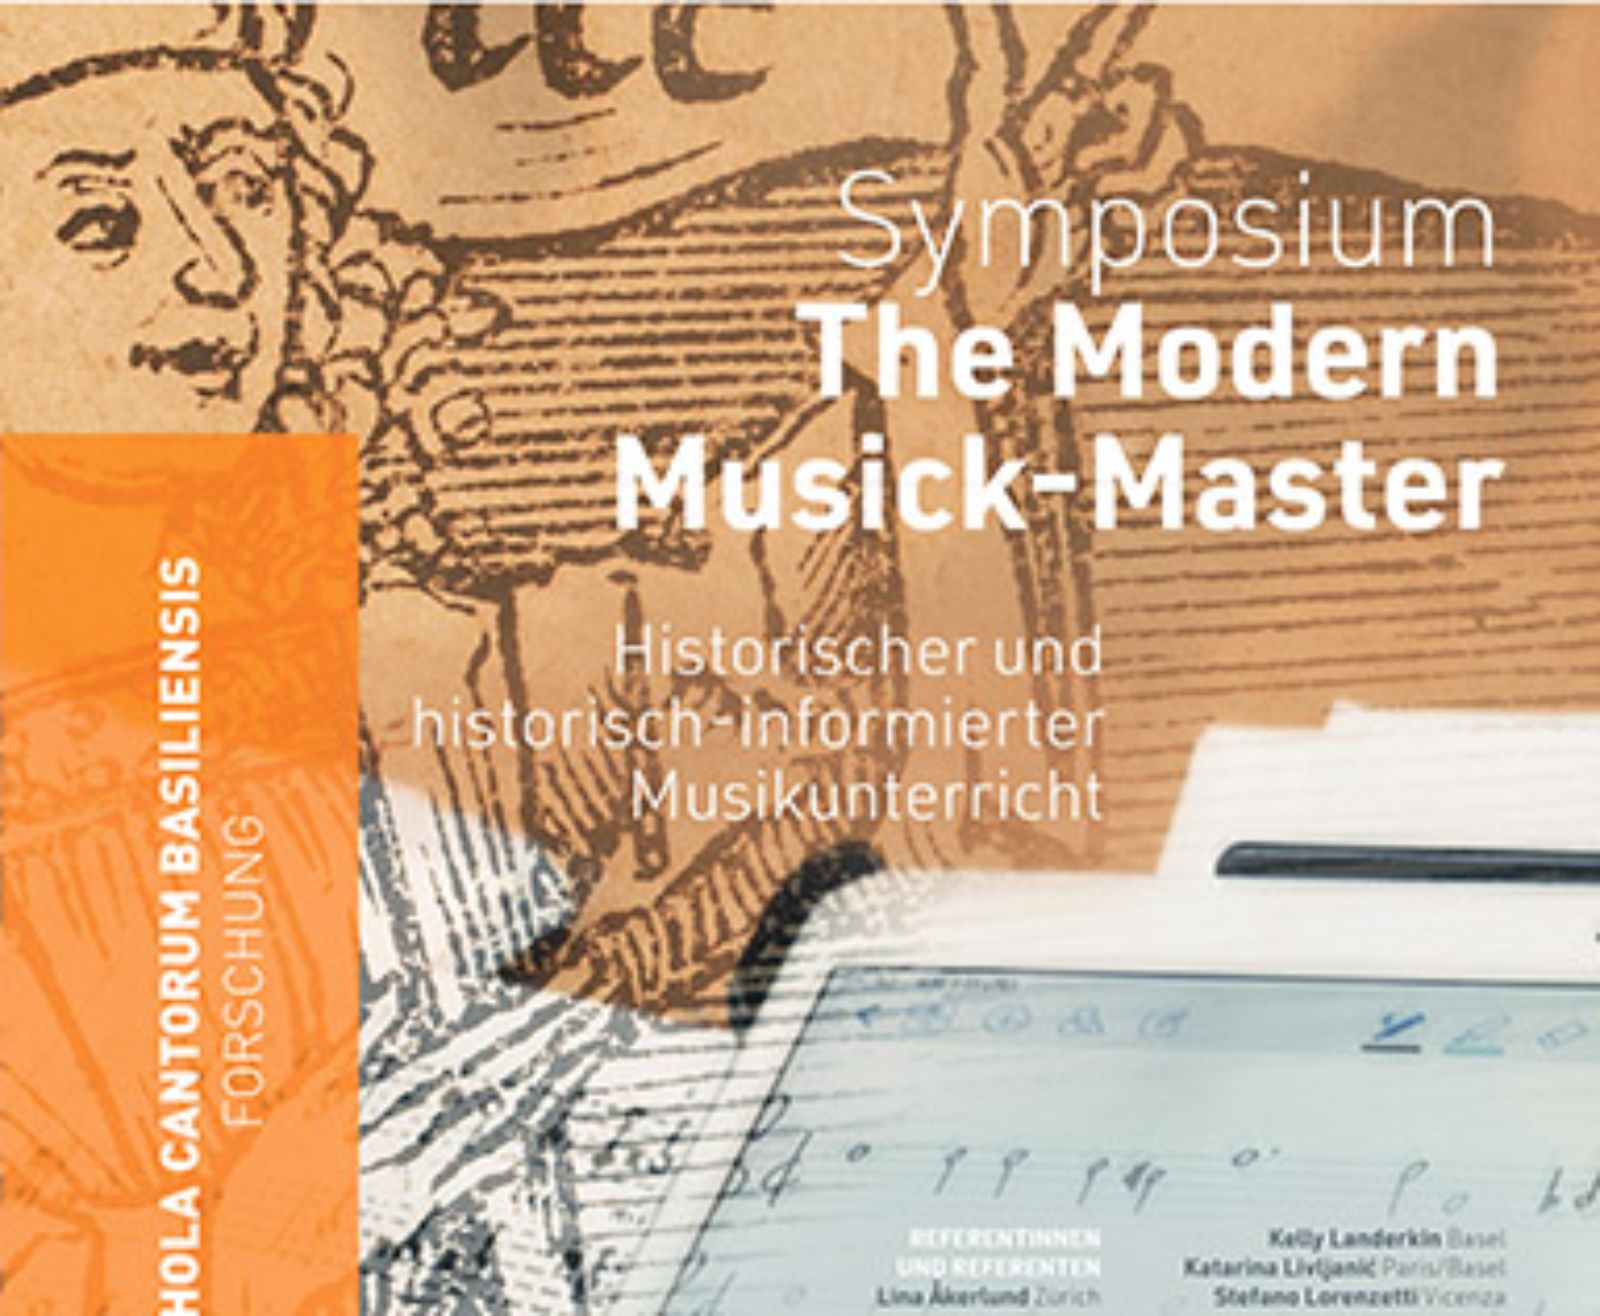 «The Modern Musick-Master»